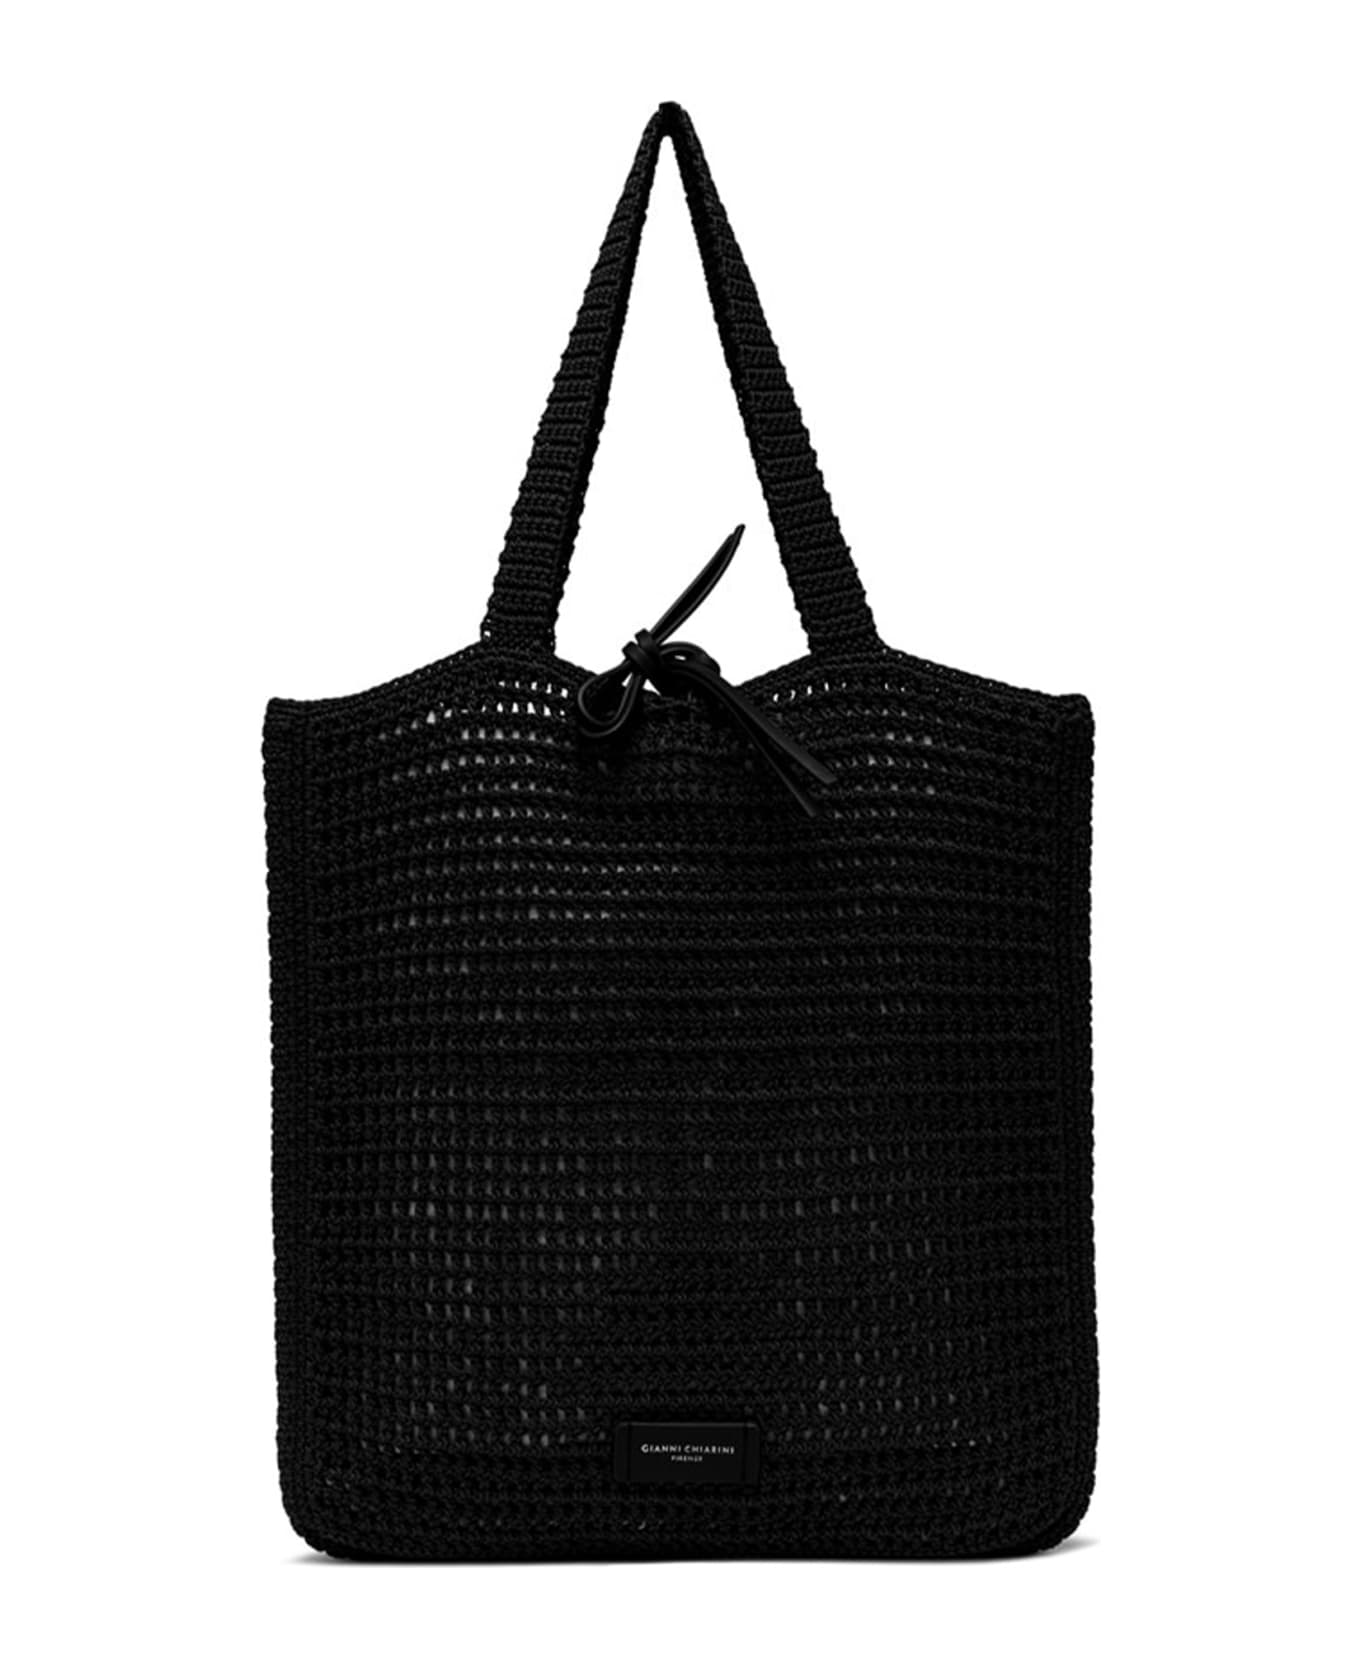 Gianni Chiarini Black Vittoria Shopping Bag In Crochet Fabric - NERO トートバッグ